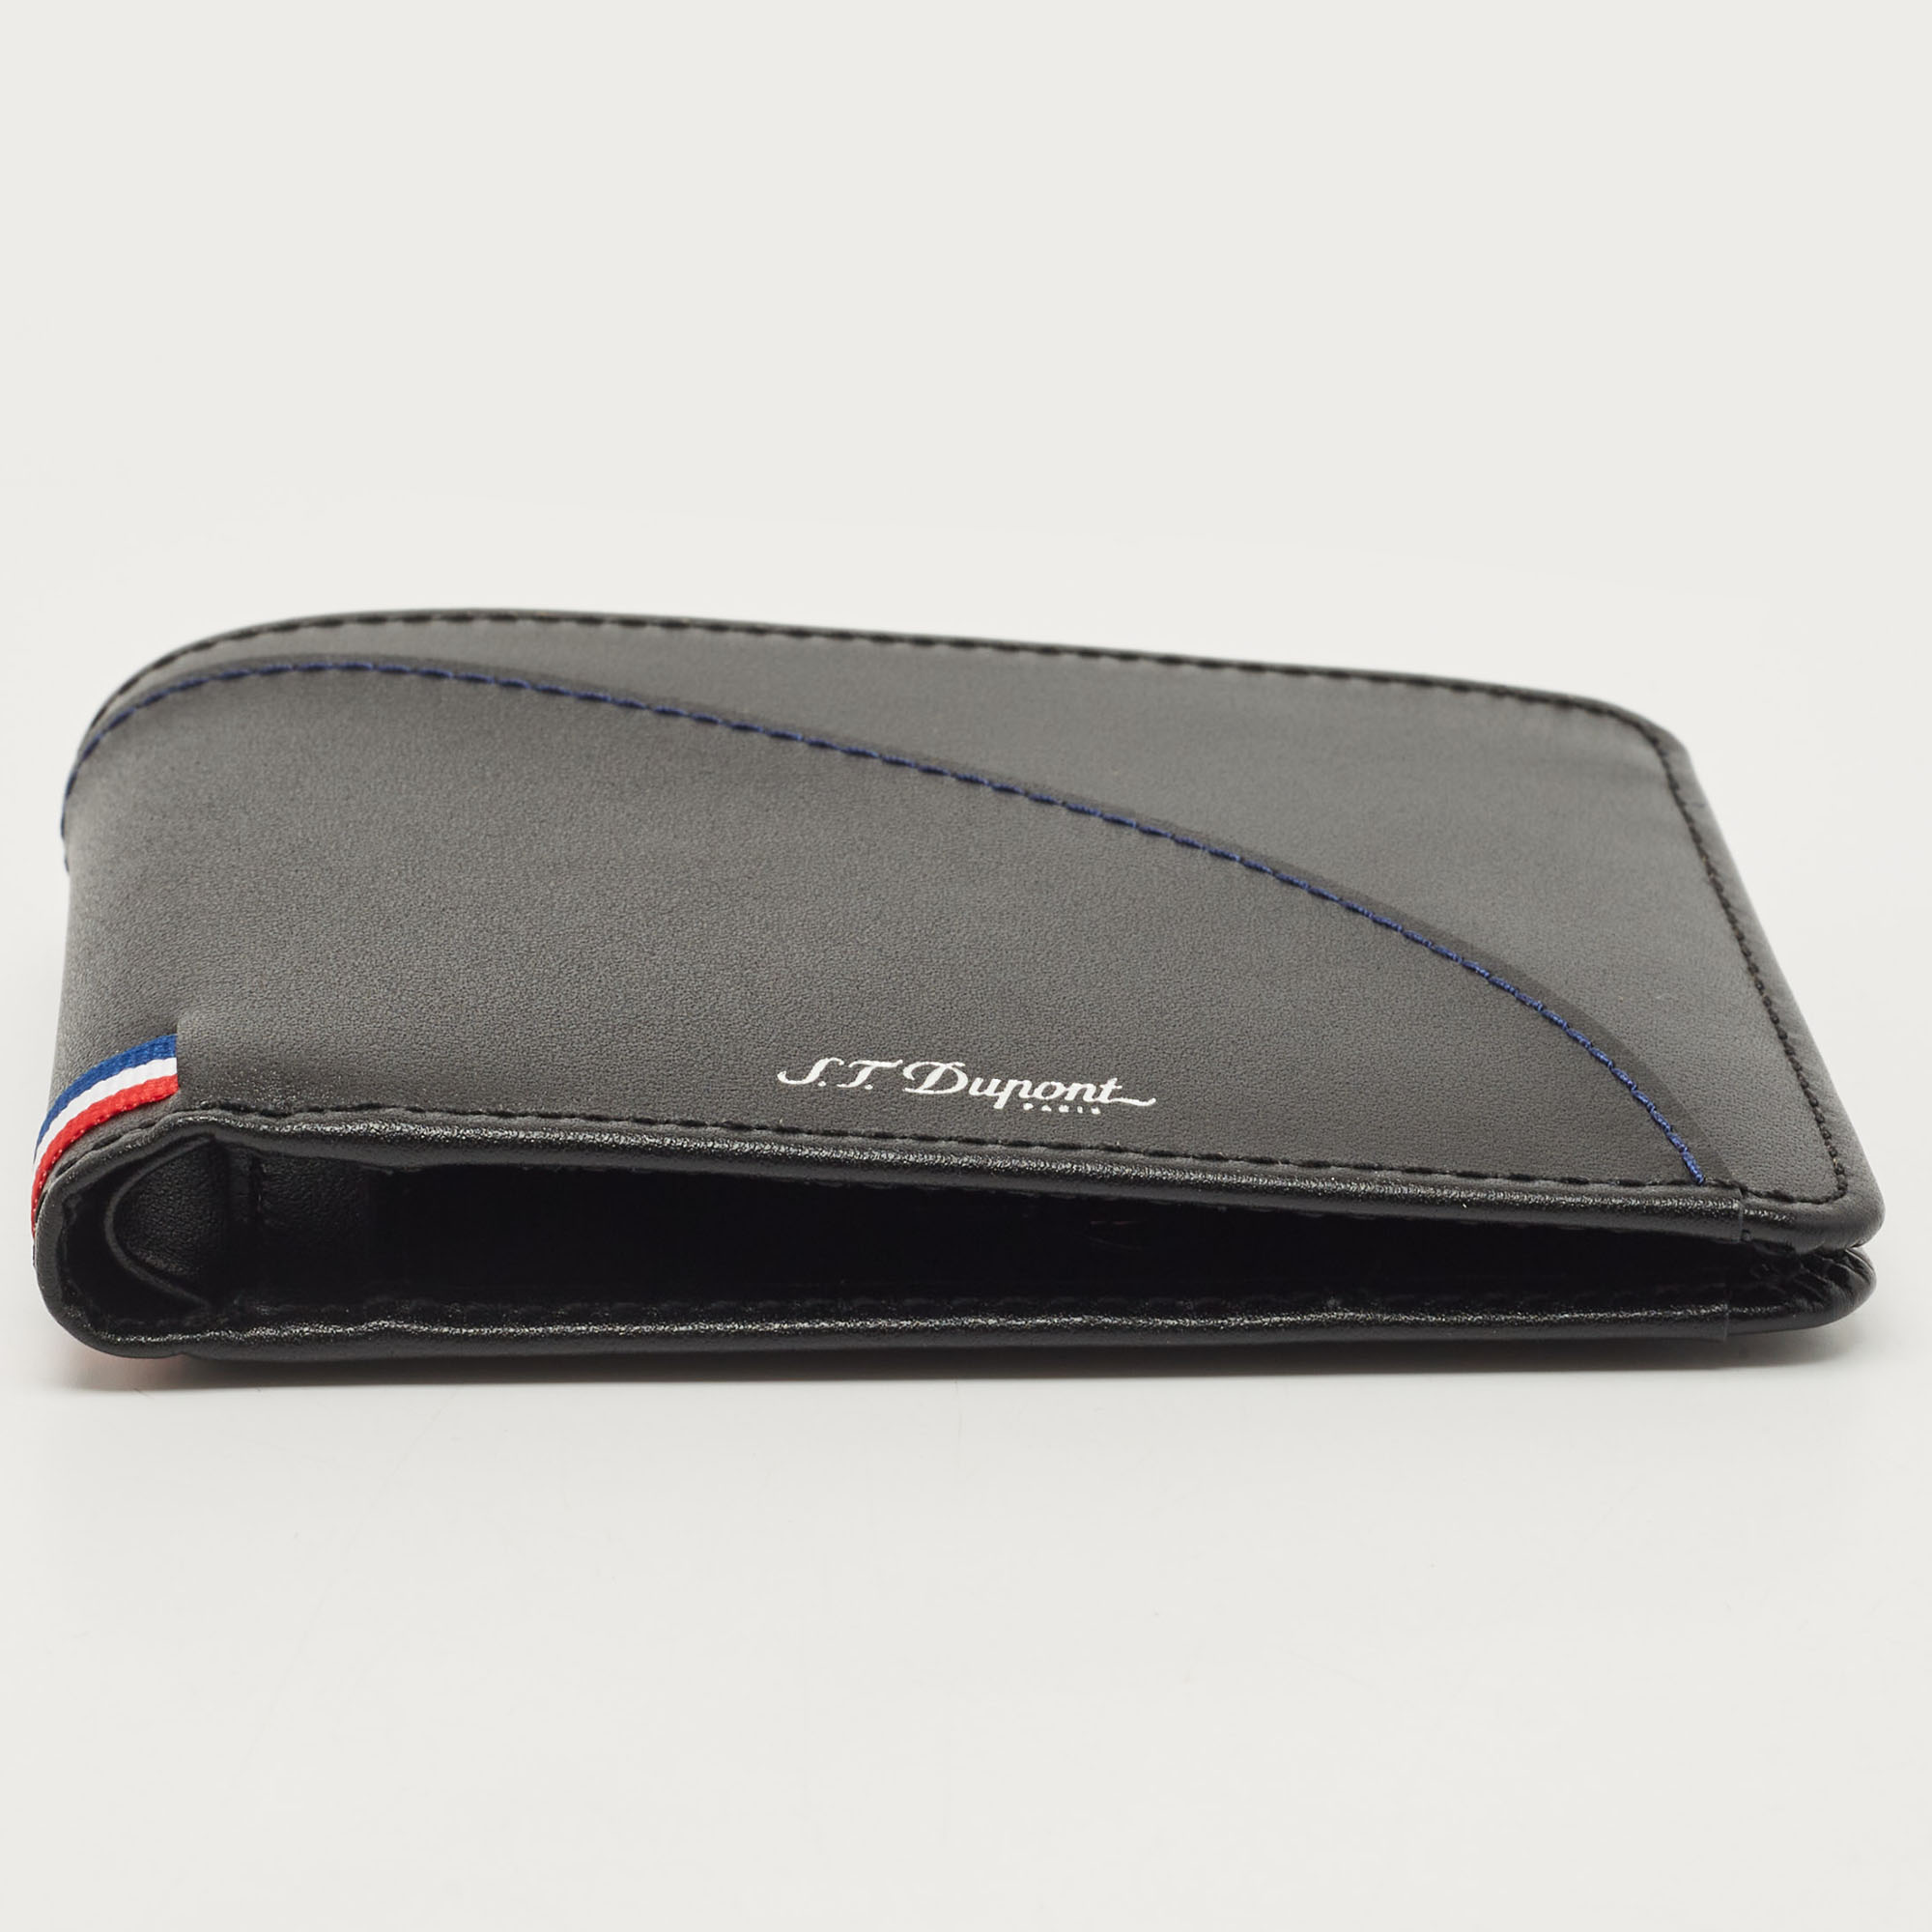 S.t. Dupont Black Leather 8CC Billfold Wallet